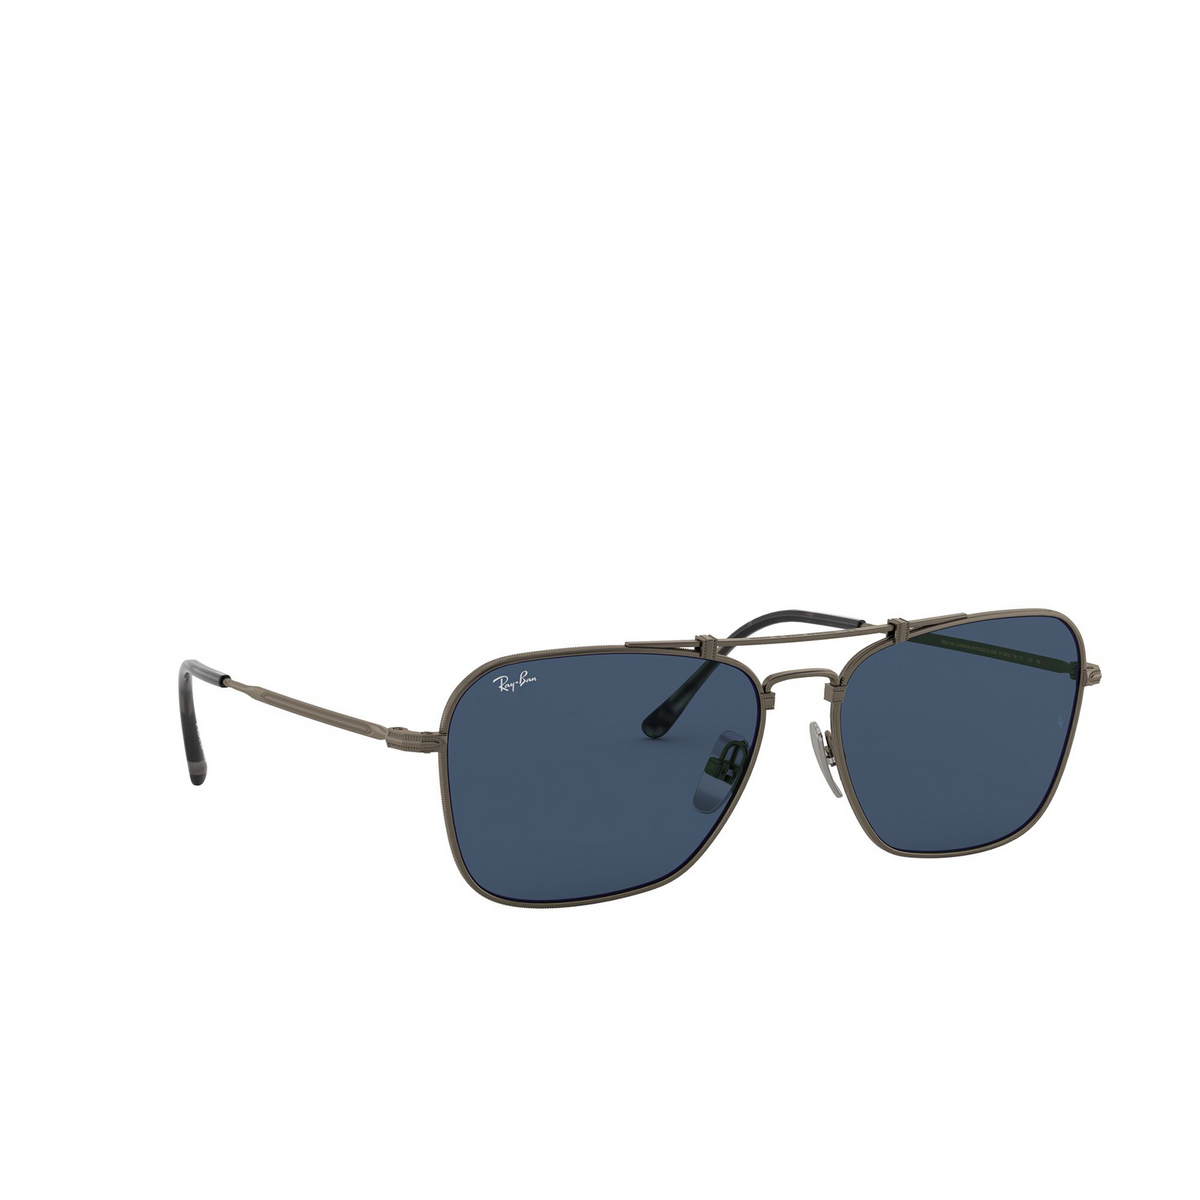 Ray-Ban® Square Sunglasses: Titanium RB8136 color Demi Gloss Pewter 9138T0 - three-quarters view.